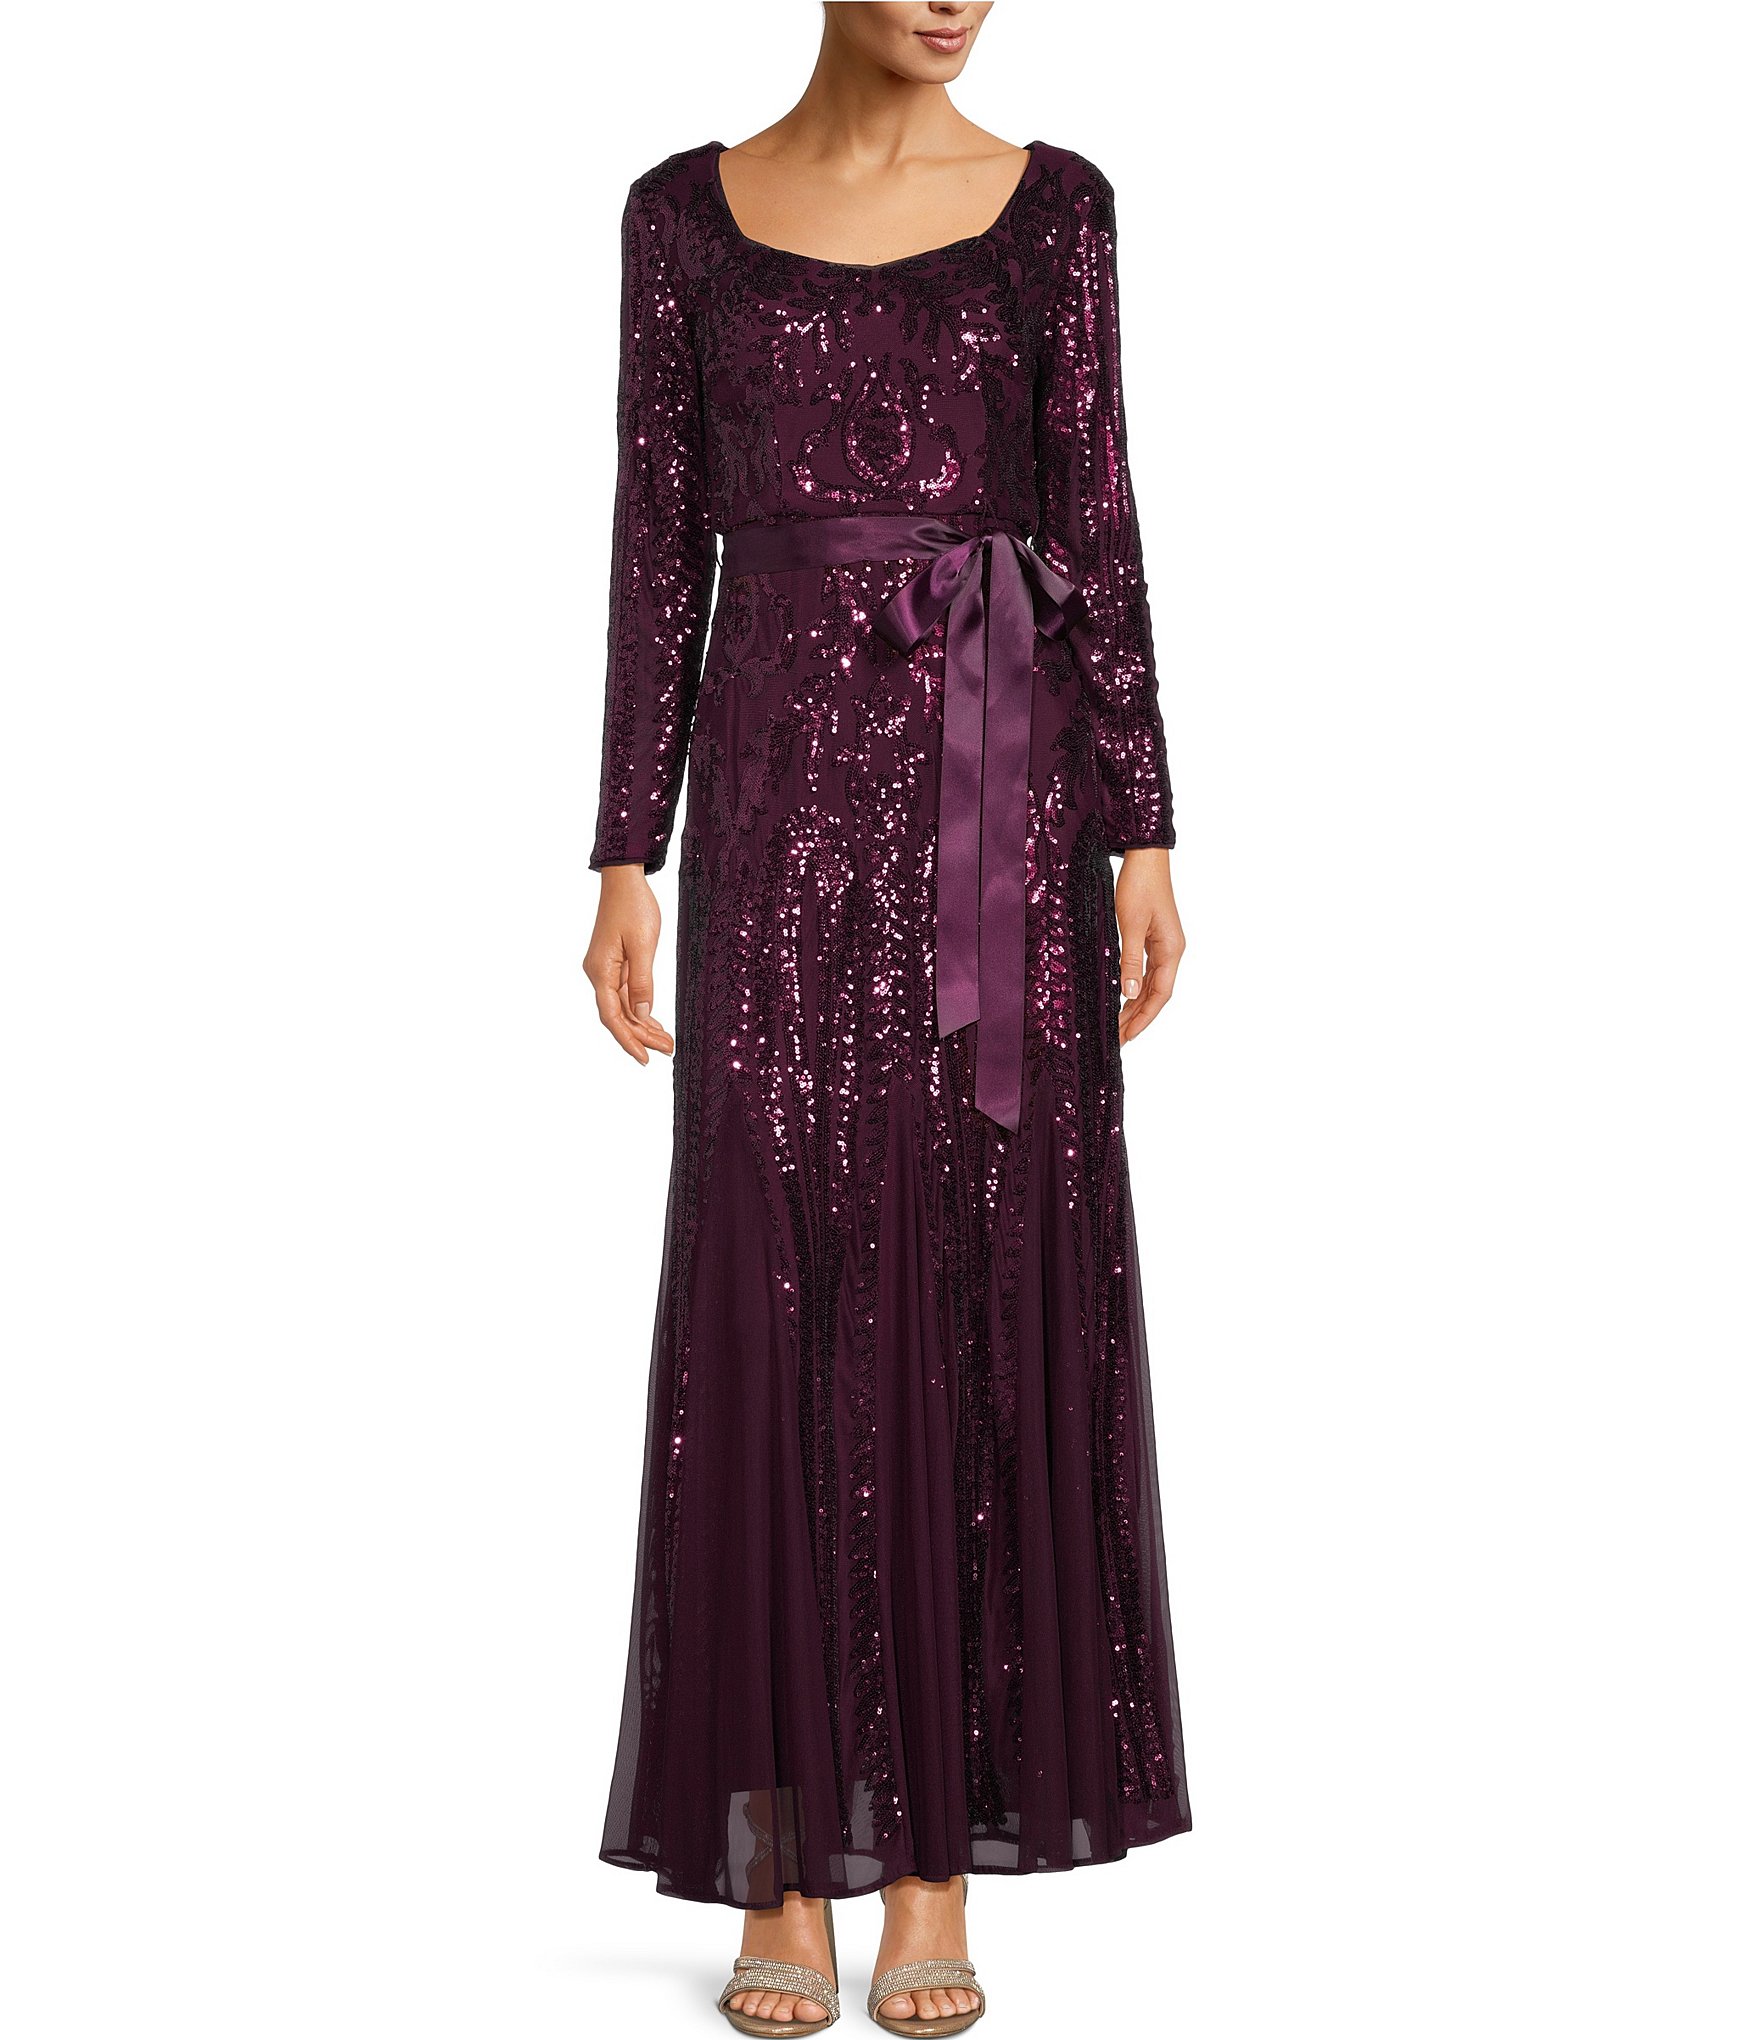 r&m richards purple dress